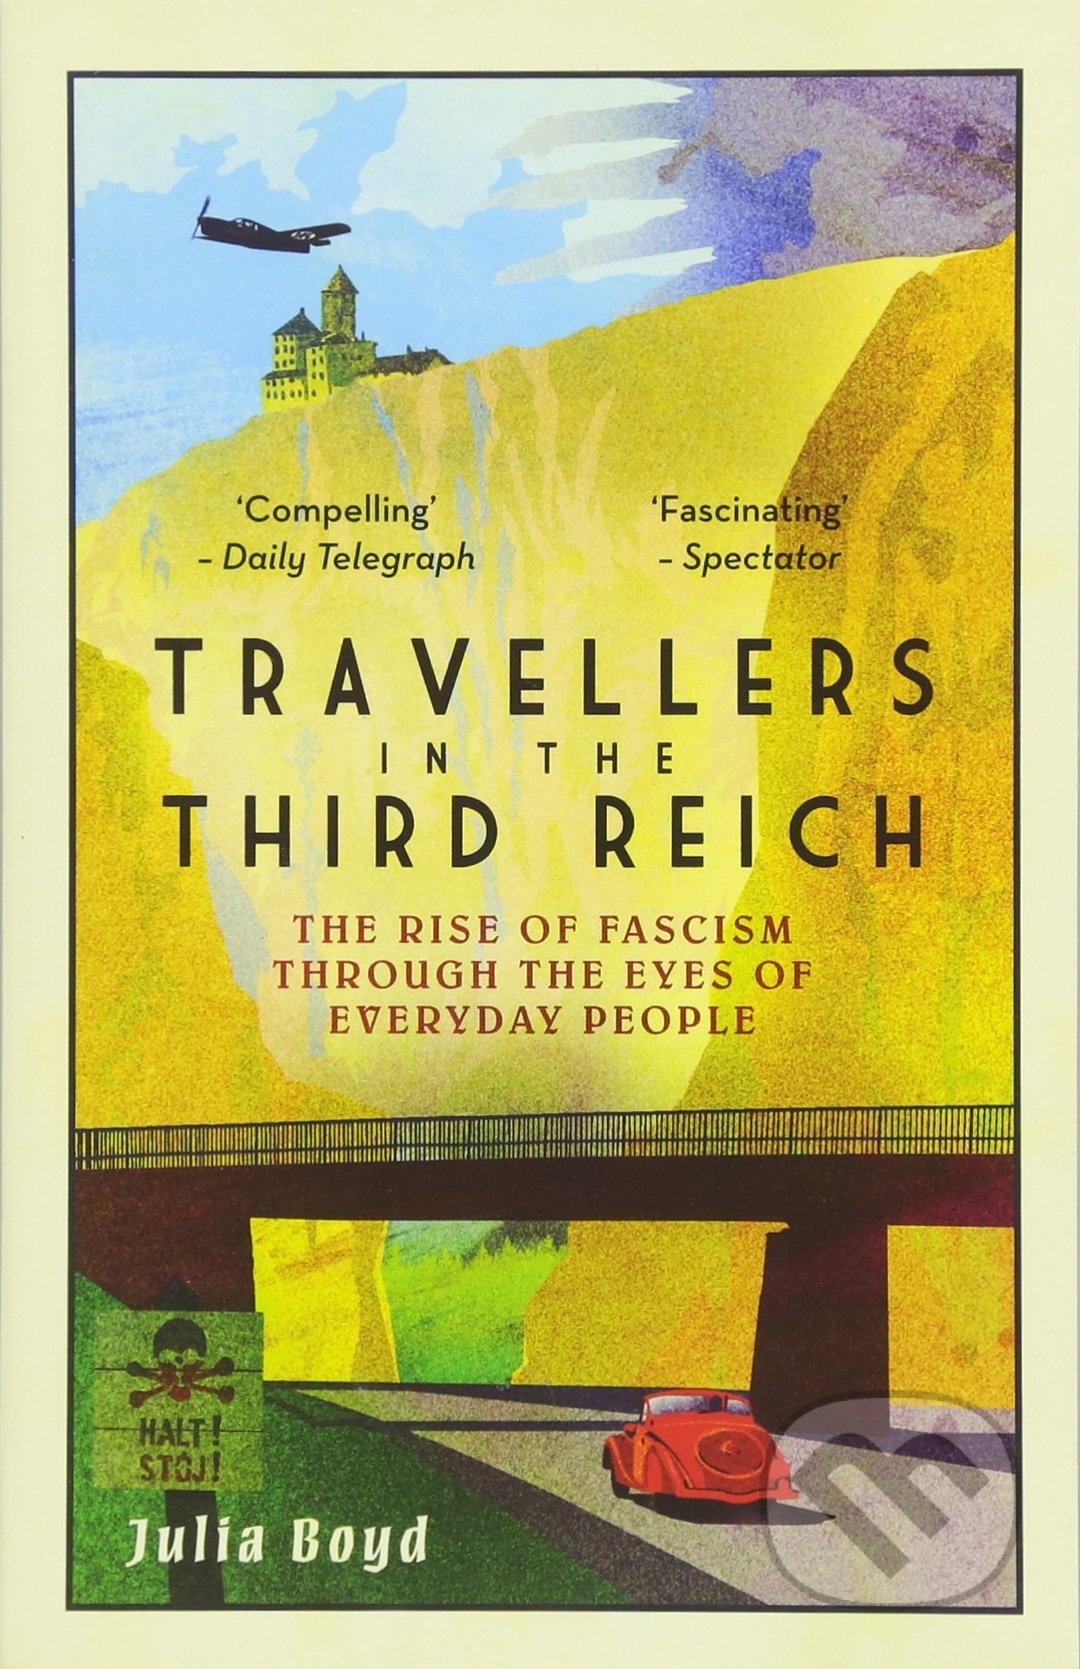 Travellers in the Third Reich - Julia Boyd, Elliott and Thompson, 2018